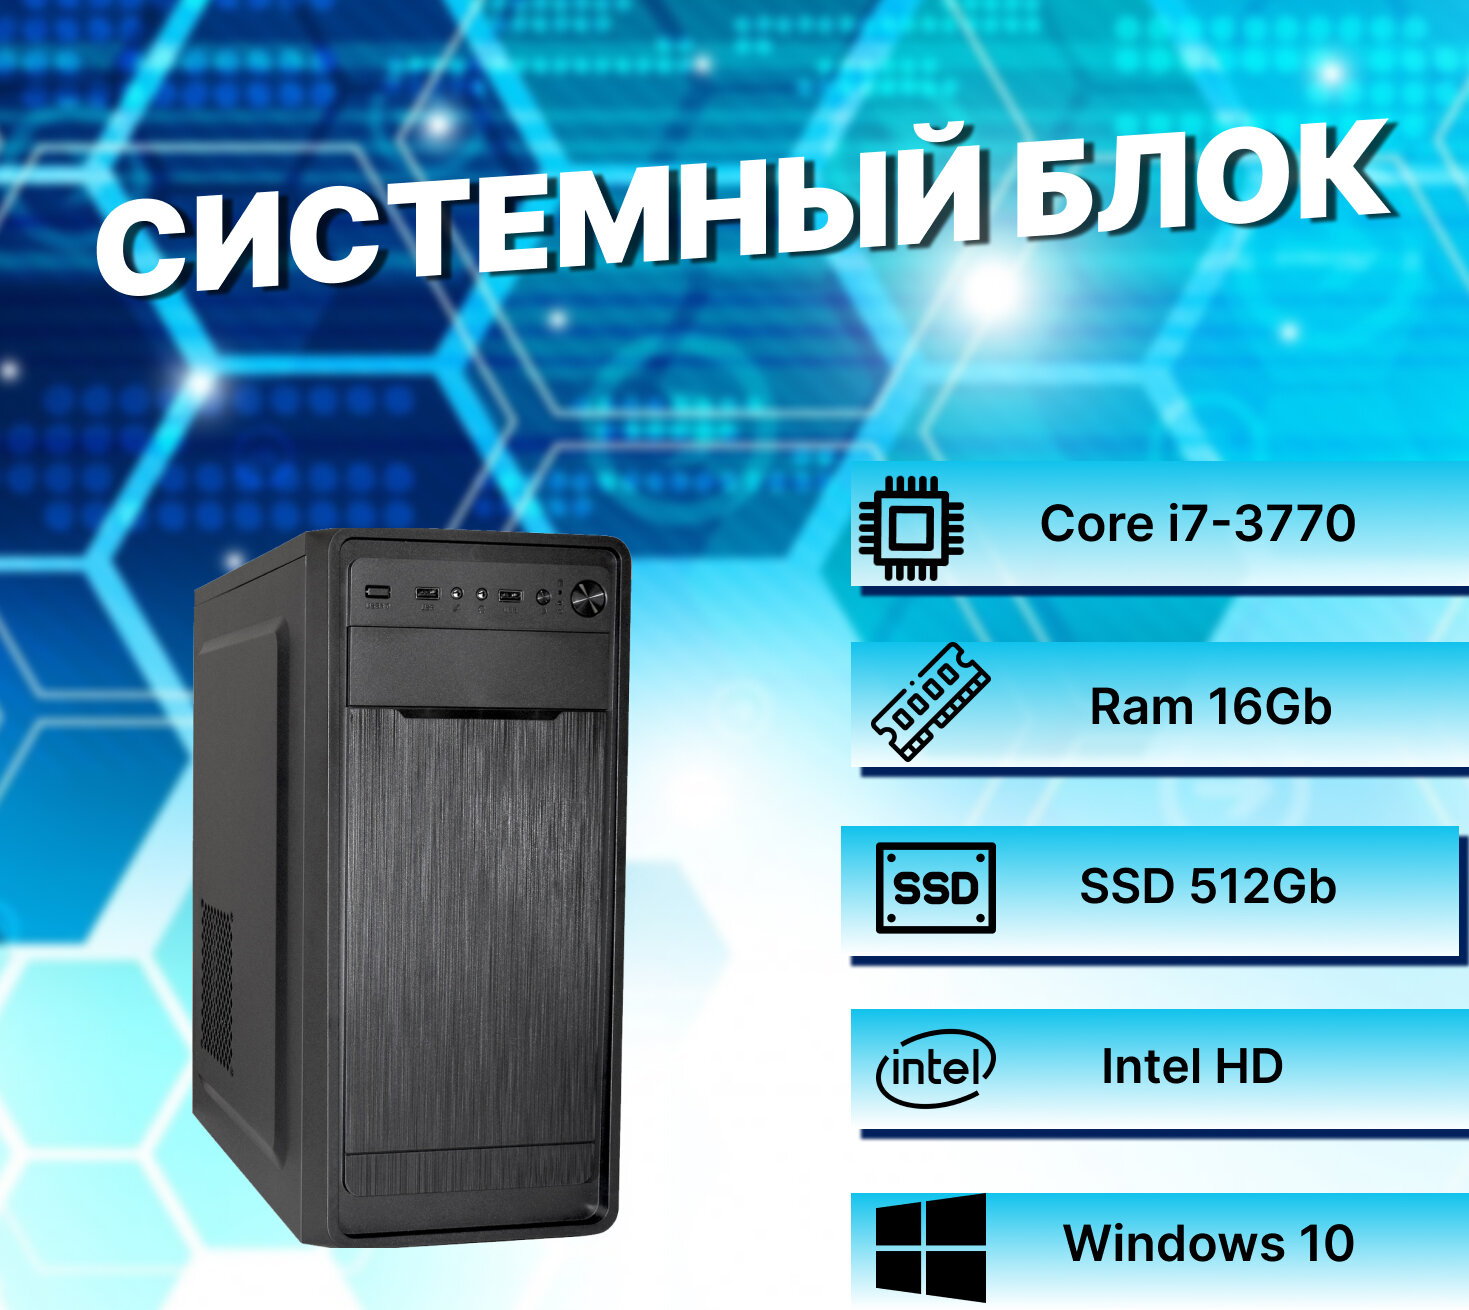 Системный блок Intel Core I7-3770 (3.4ГГц)/ RAM 16Gb/ SSD 512Gb/ Intel HD/ Windows 10 Pro